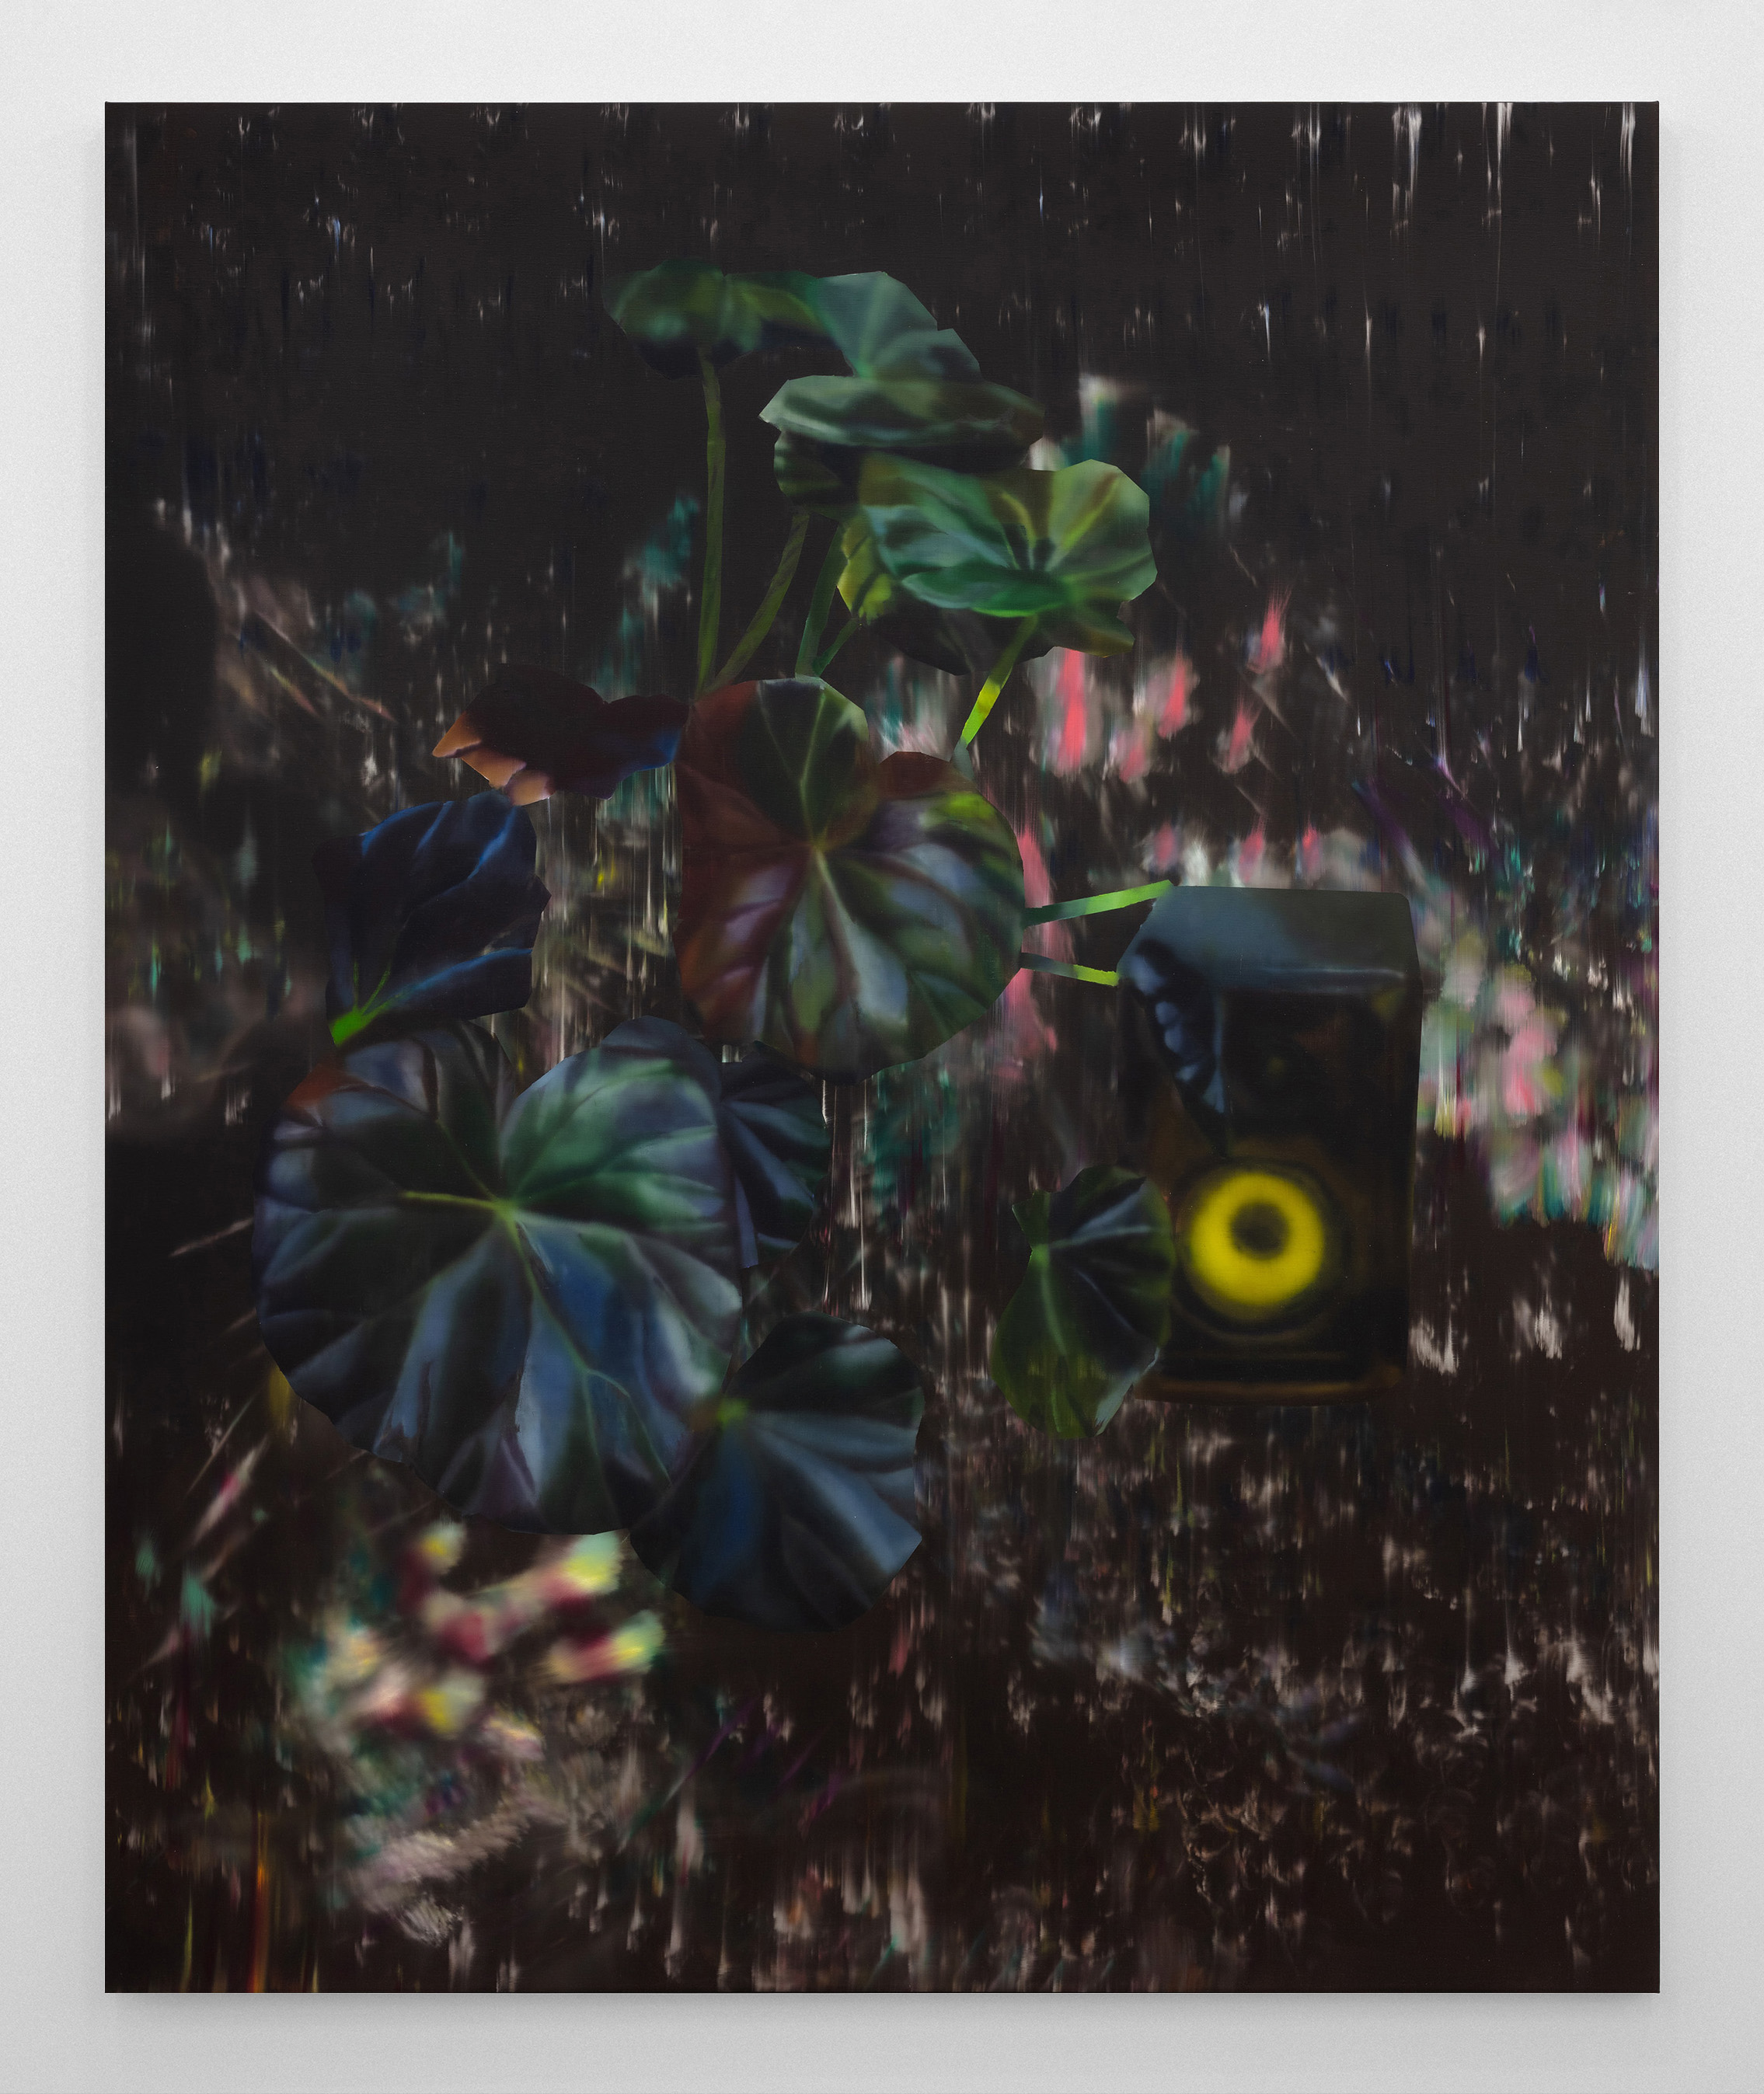 Rute Merk, Nocturne Rokit II, 2020, oil on canvas, 170 x 140 cm, 55 1/8 x 55 1/8 in.